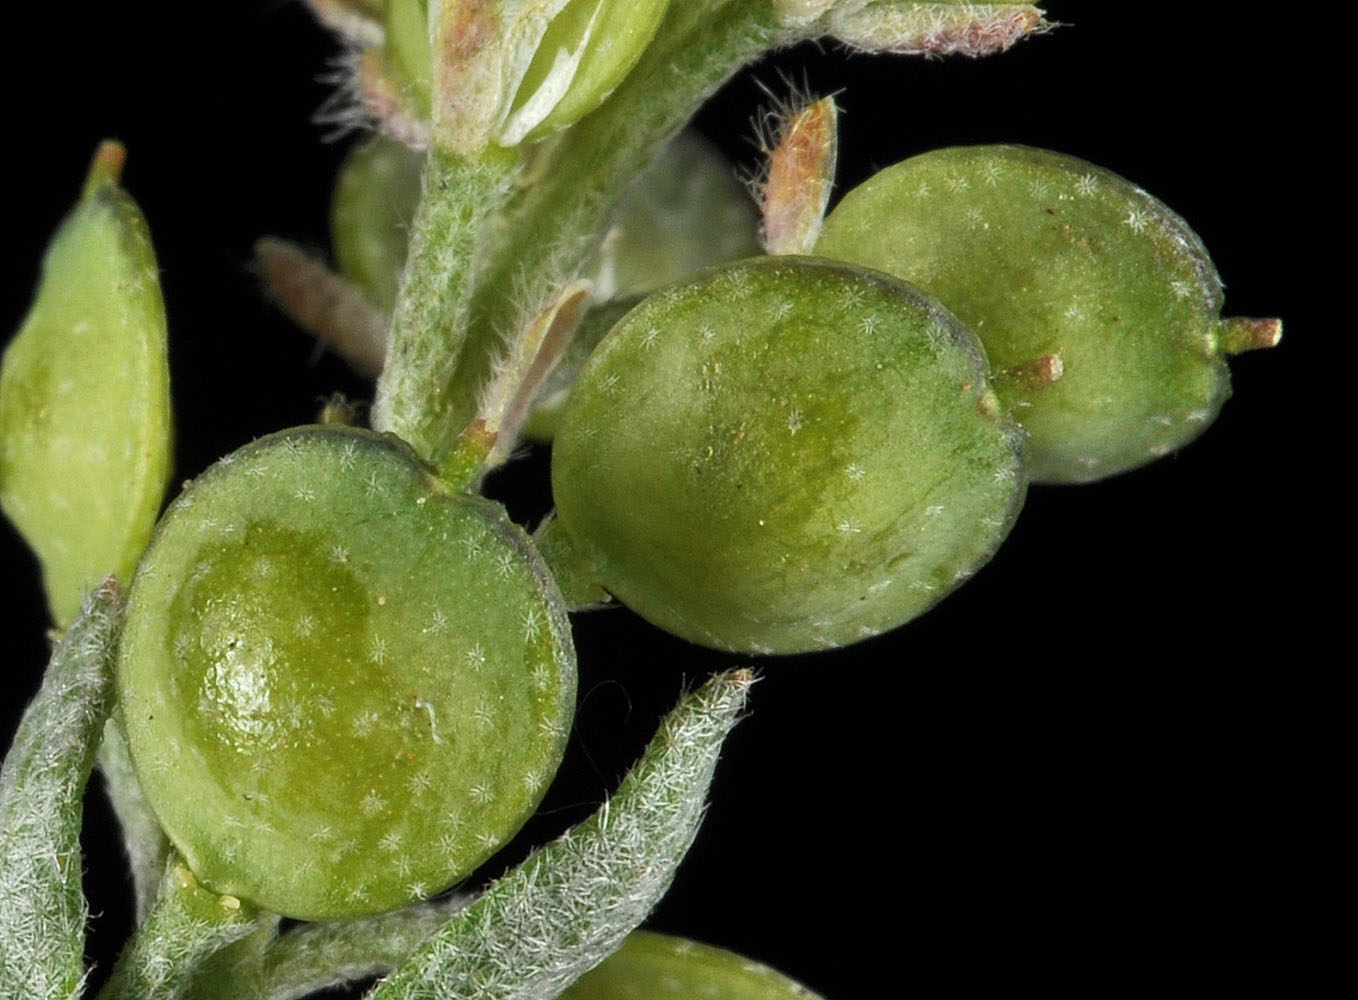 Flora of Eastern Washington Image: Alyssum desertorum